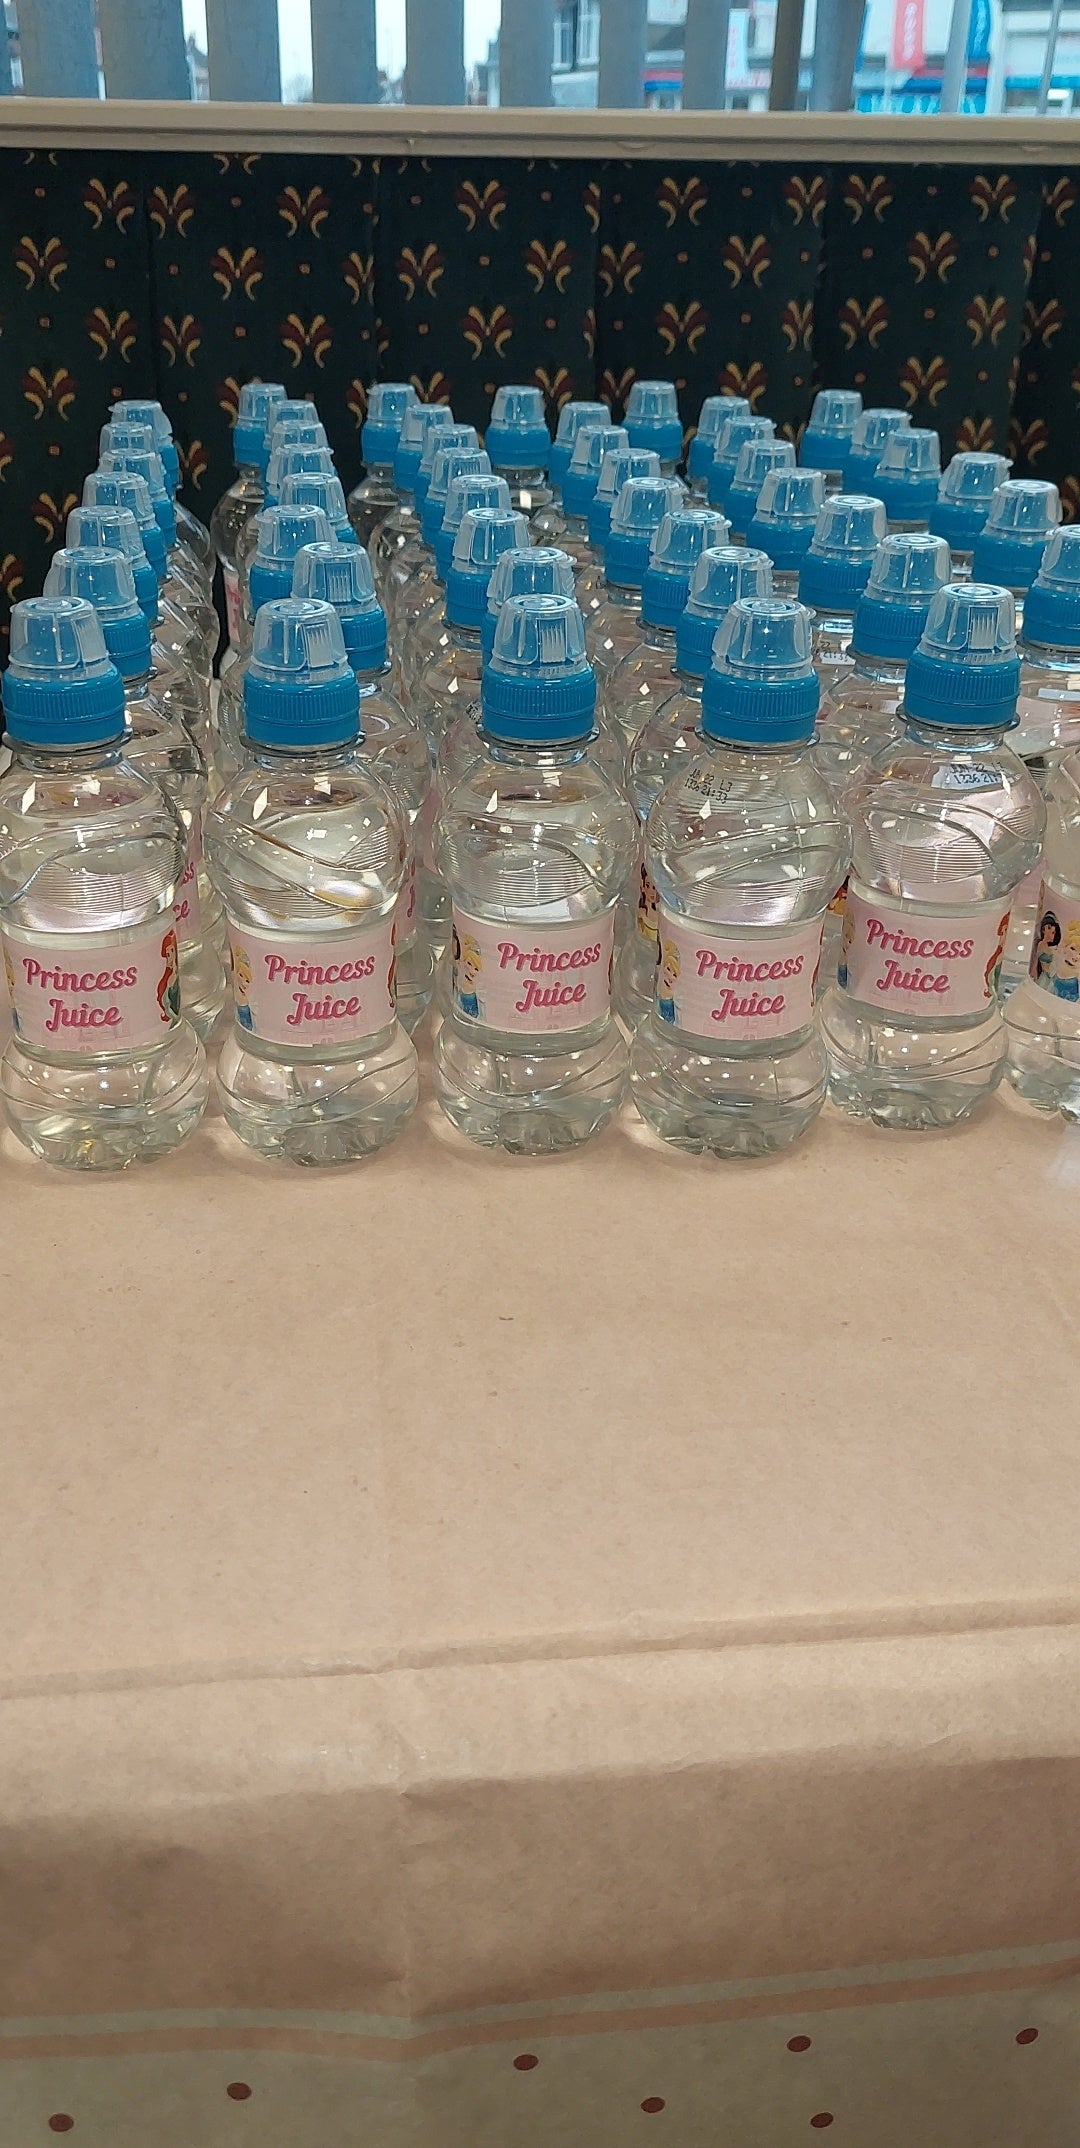 ANY DESIGN | Water Bottle Labels | Children's Juice Bottle Labels | To Fit 200ml Bottles | Waterproof Labels